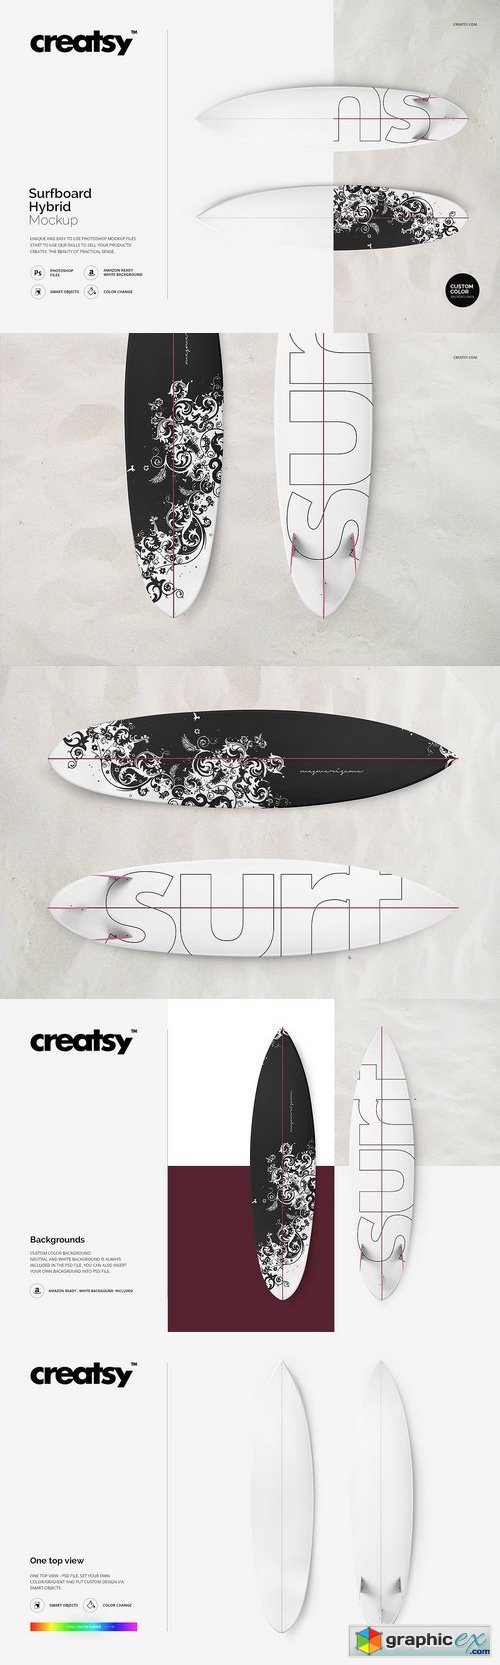 Surfboard Hybrid Mockup